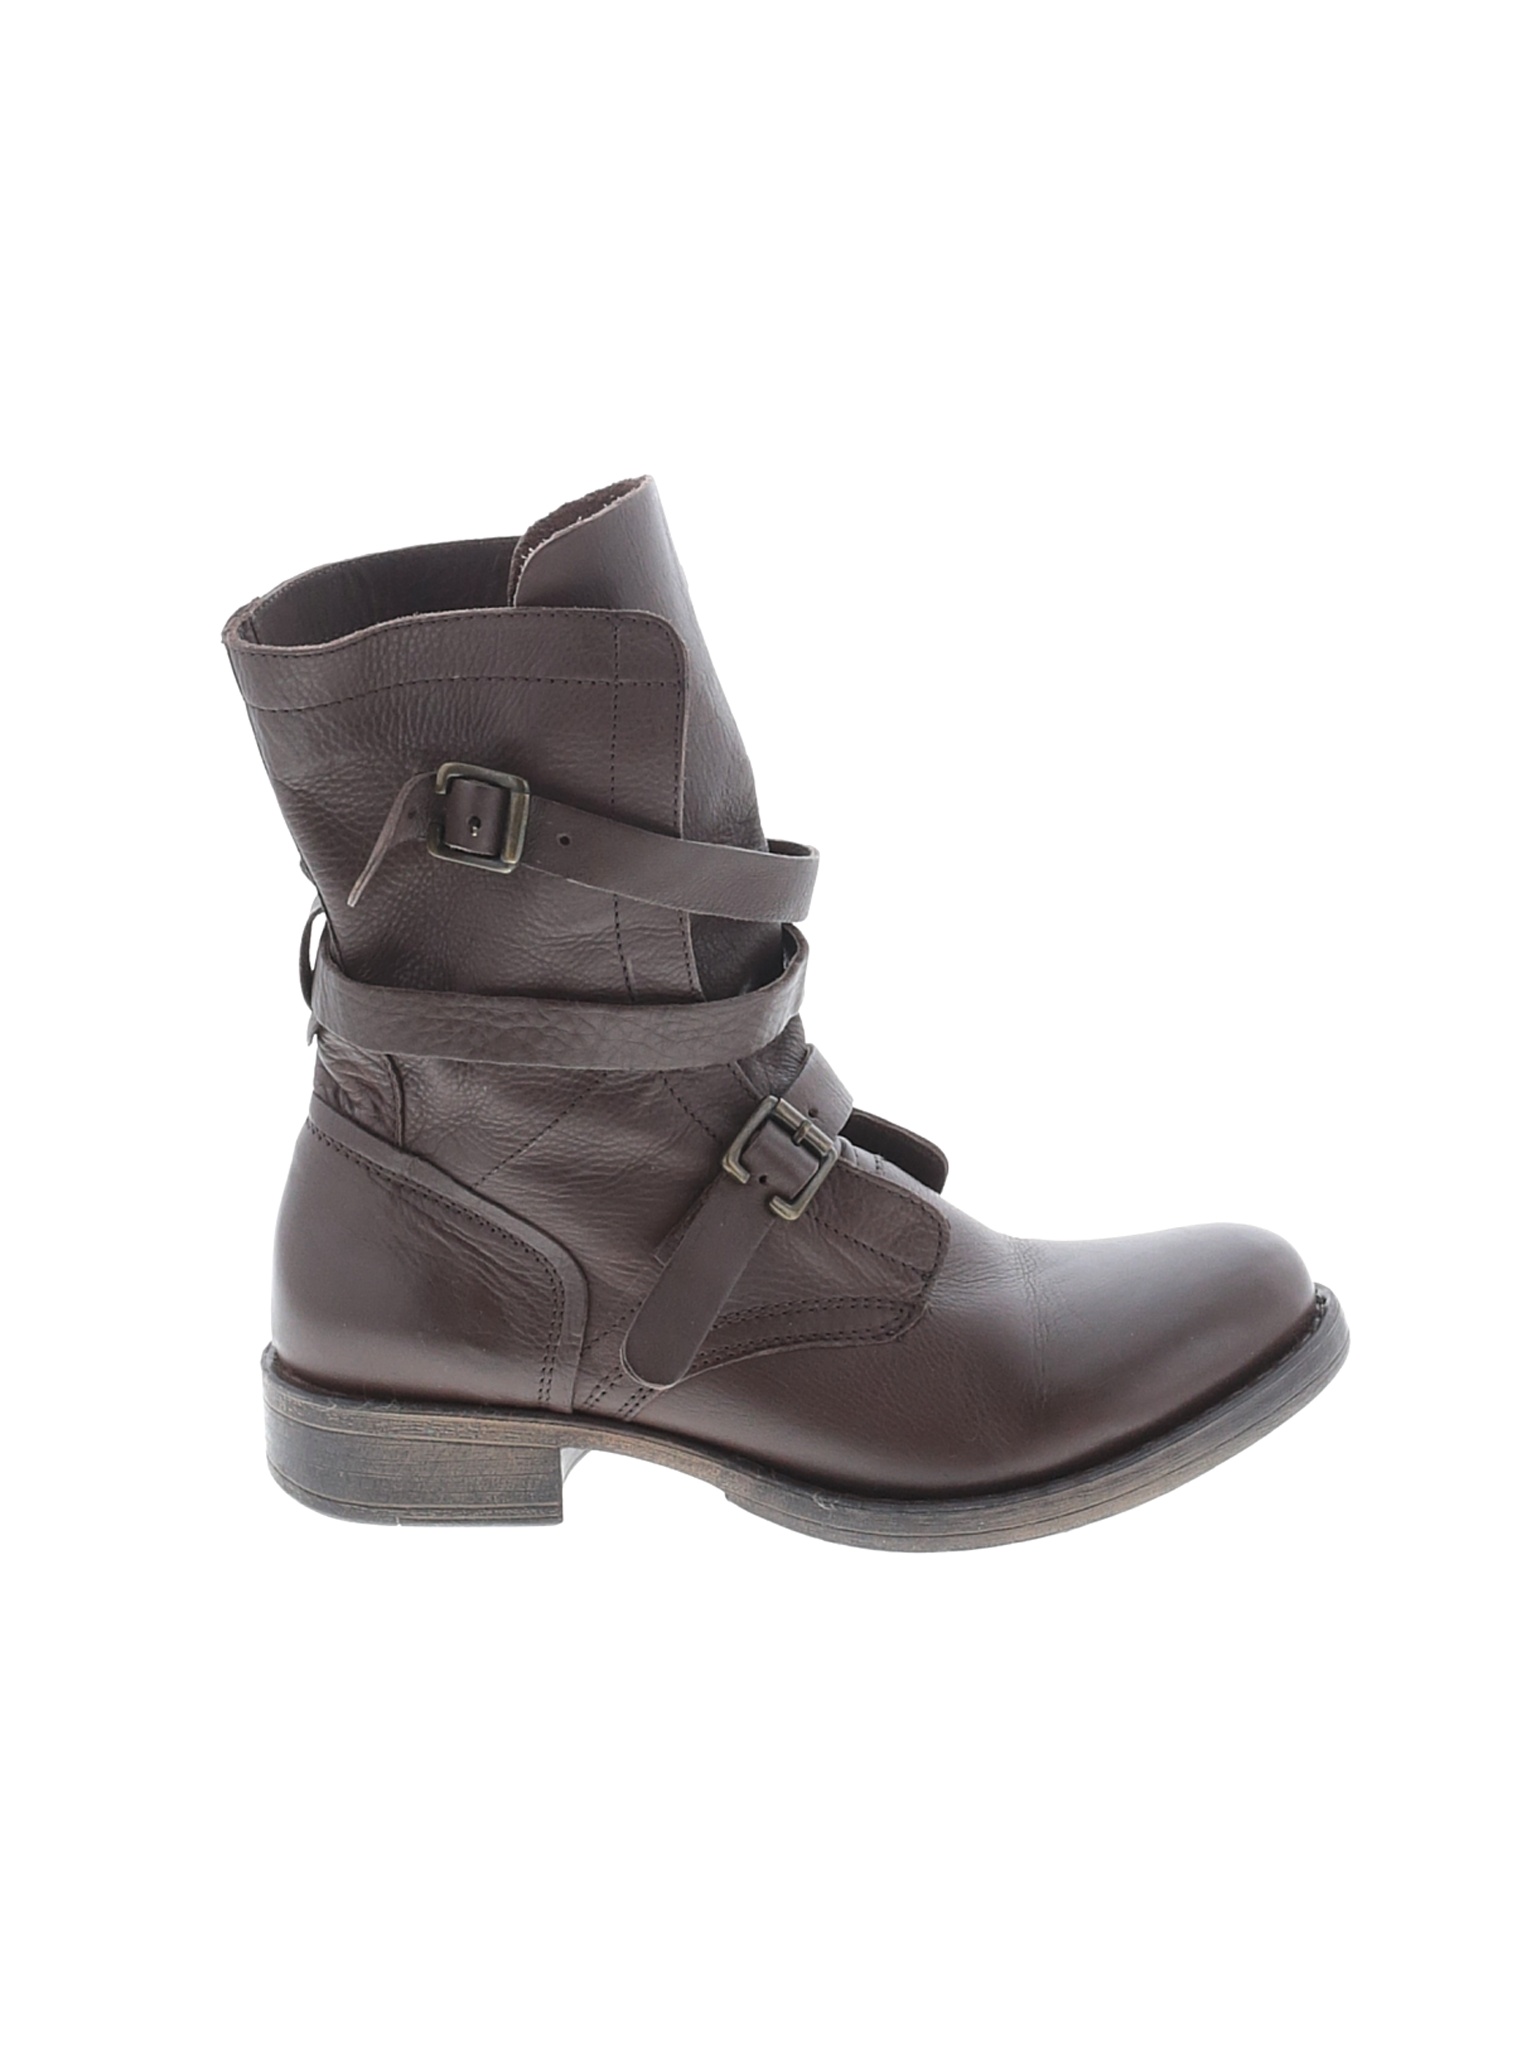 Diba True Women Brown Boots US 6.5 | eBay